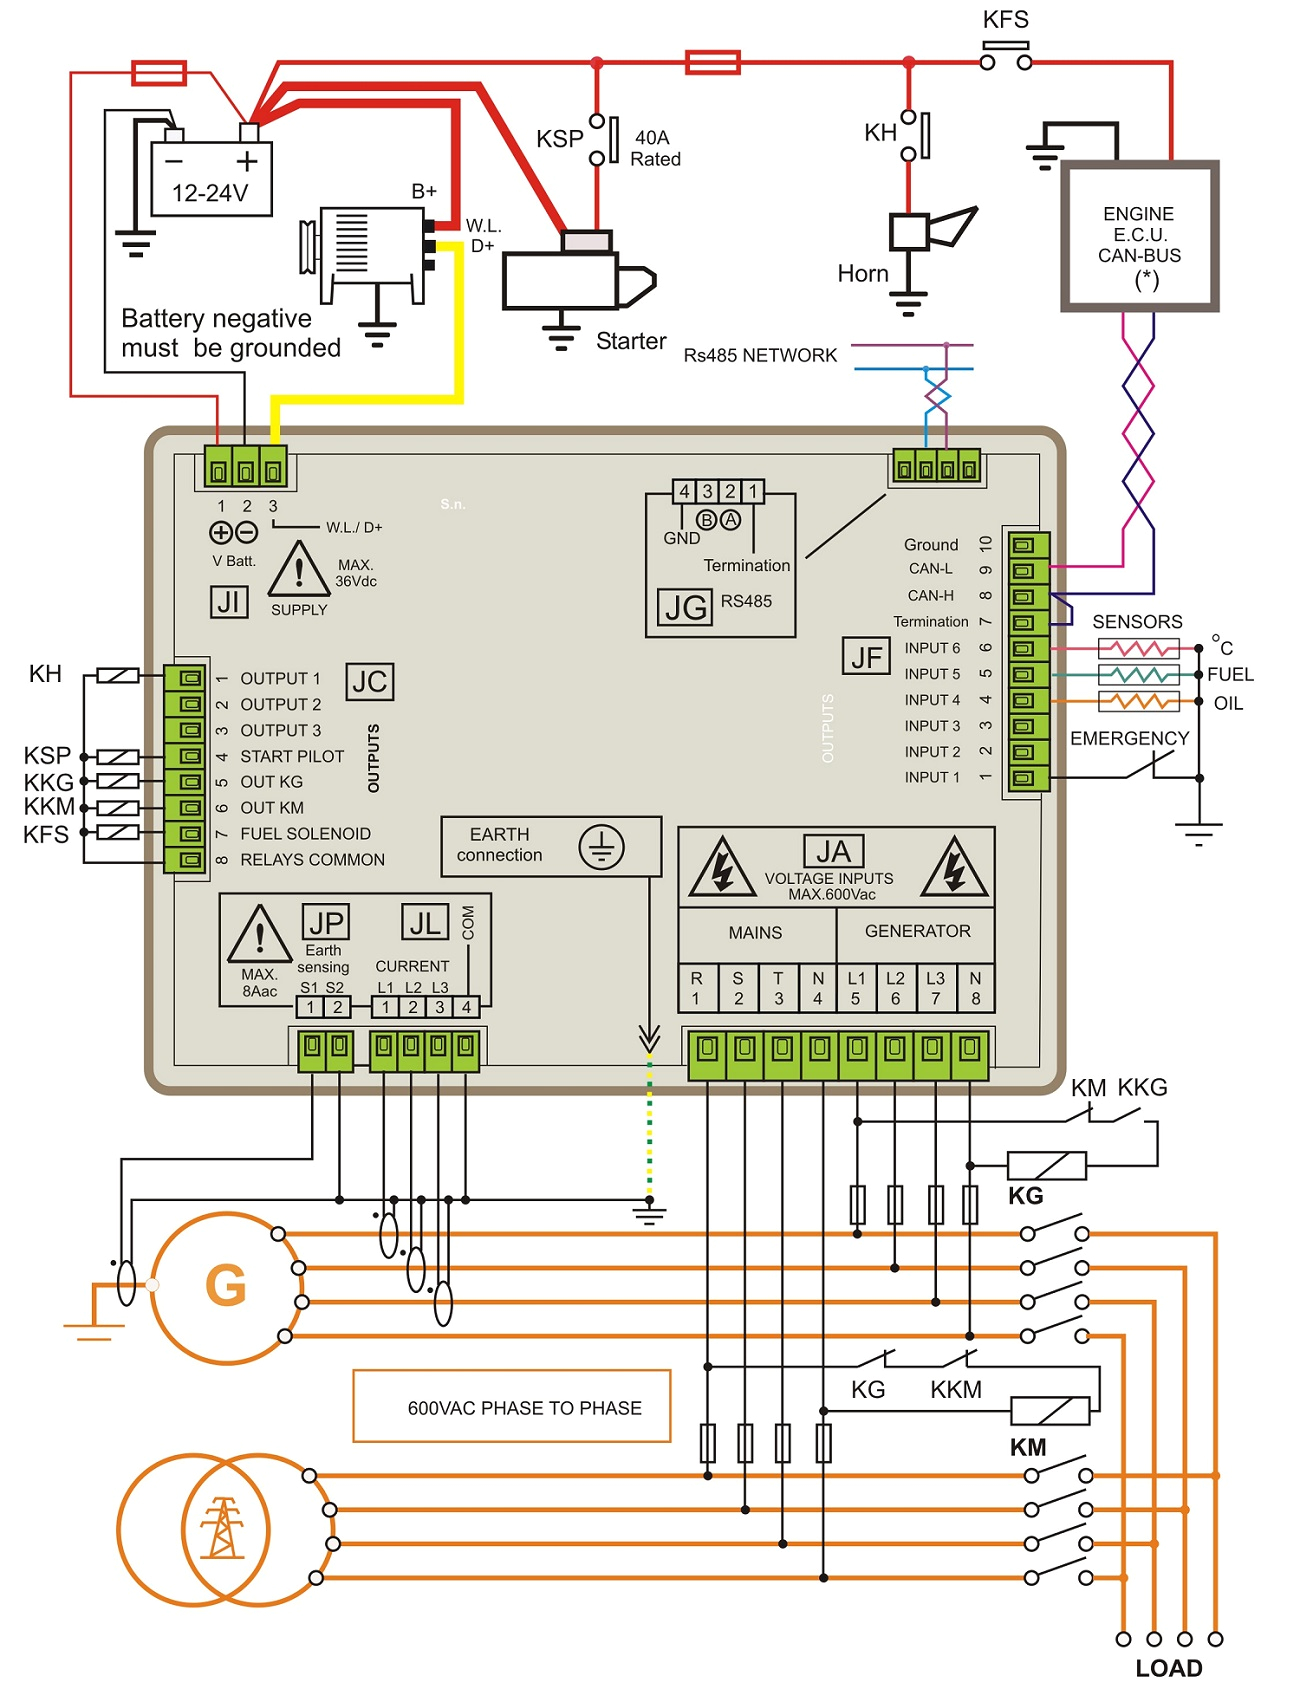 olympian generator control panel wiring diagram wiring diagram connection diagram olympian generator